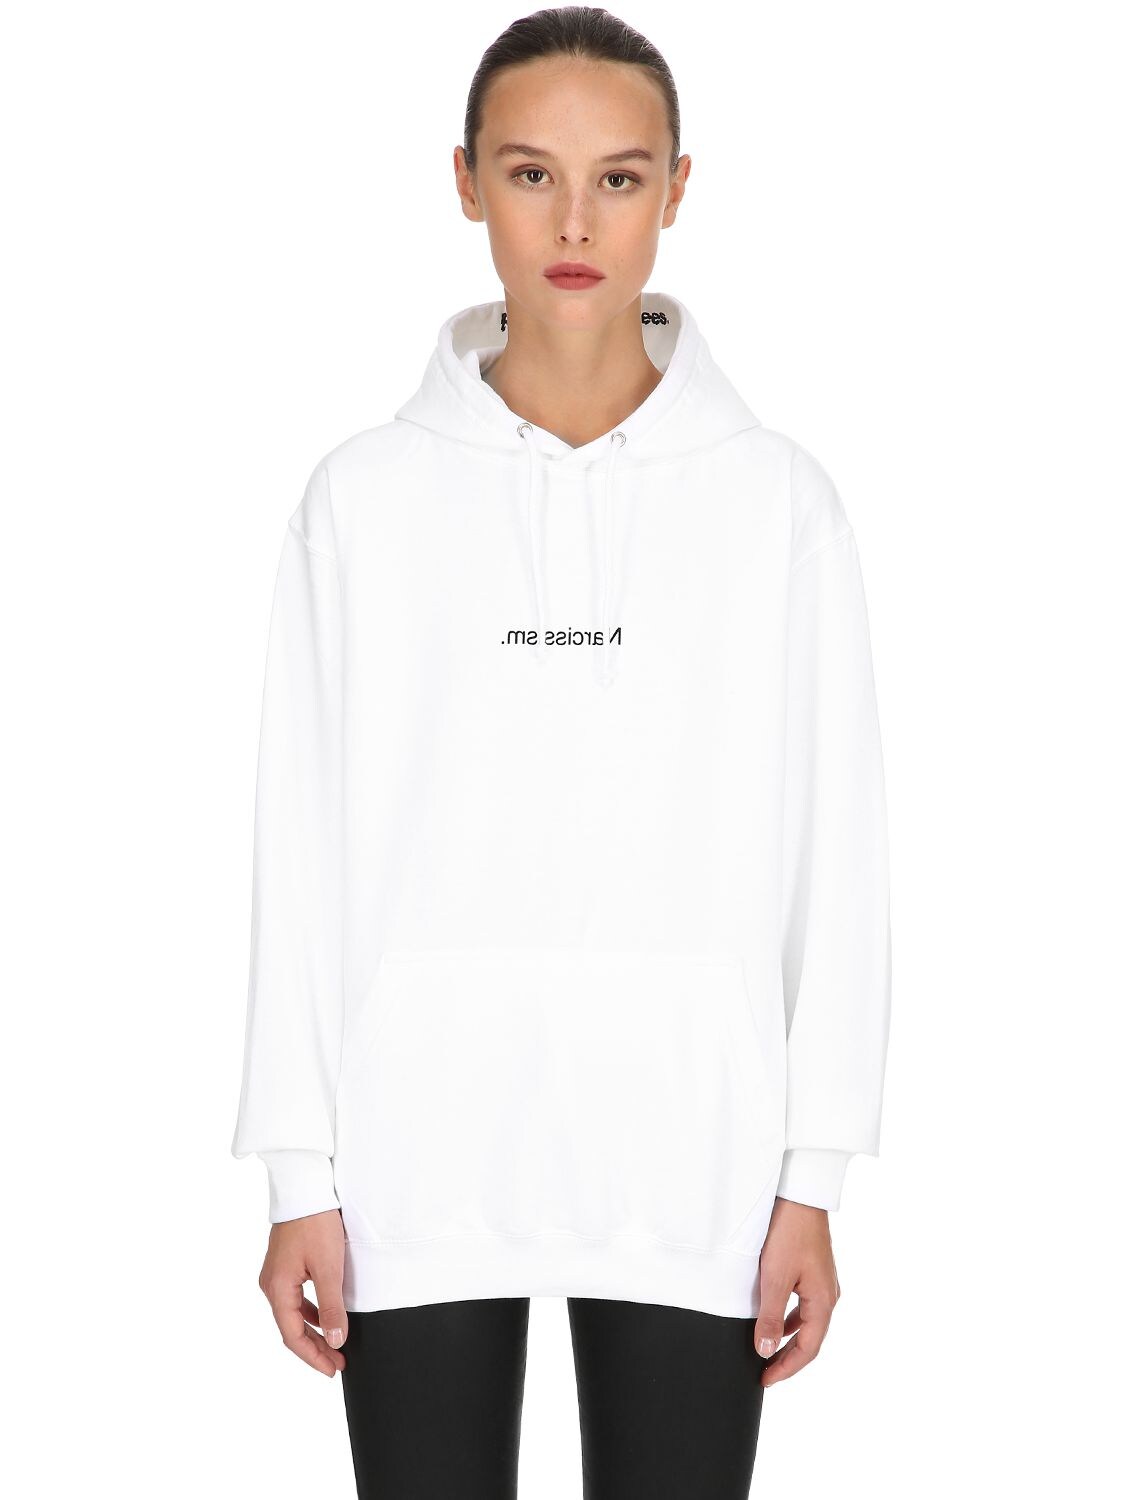 Famt - Fuck Art Make Tees Narcissism Cotton Sweatshirt In White